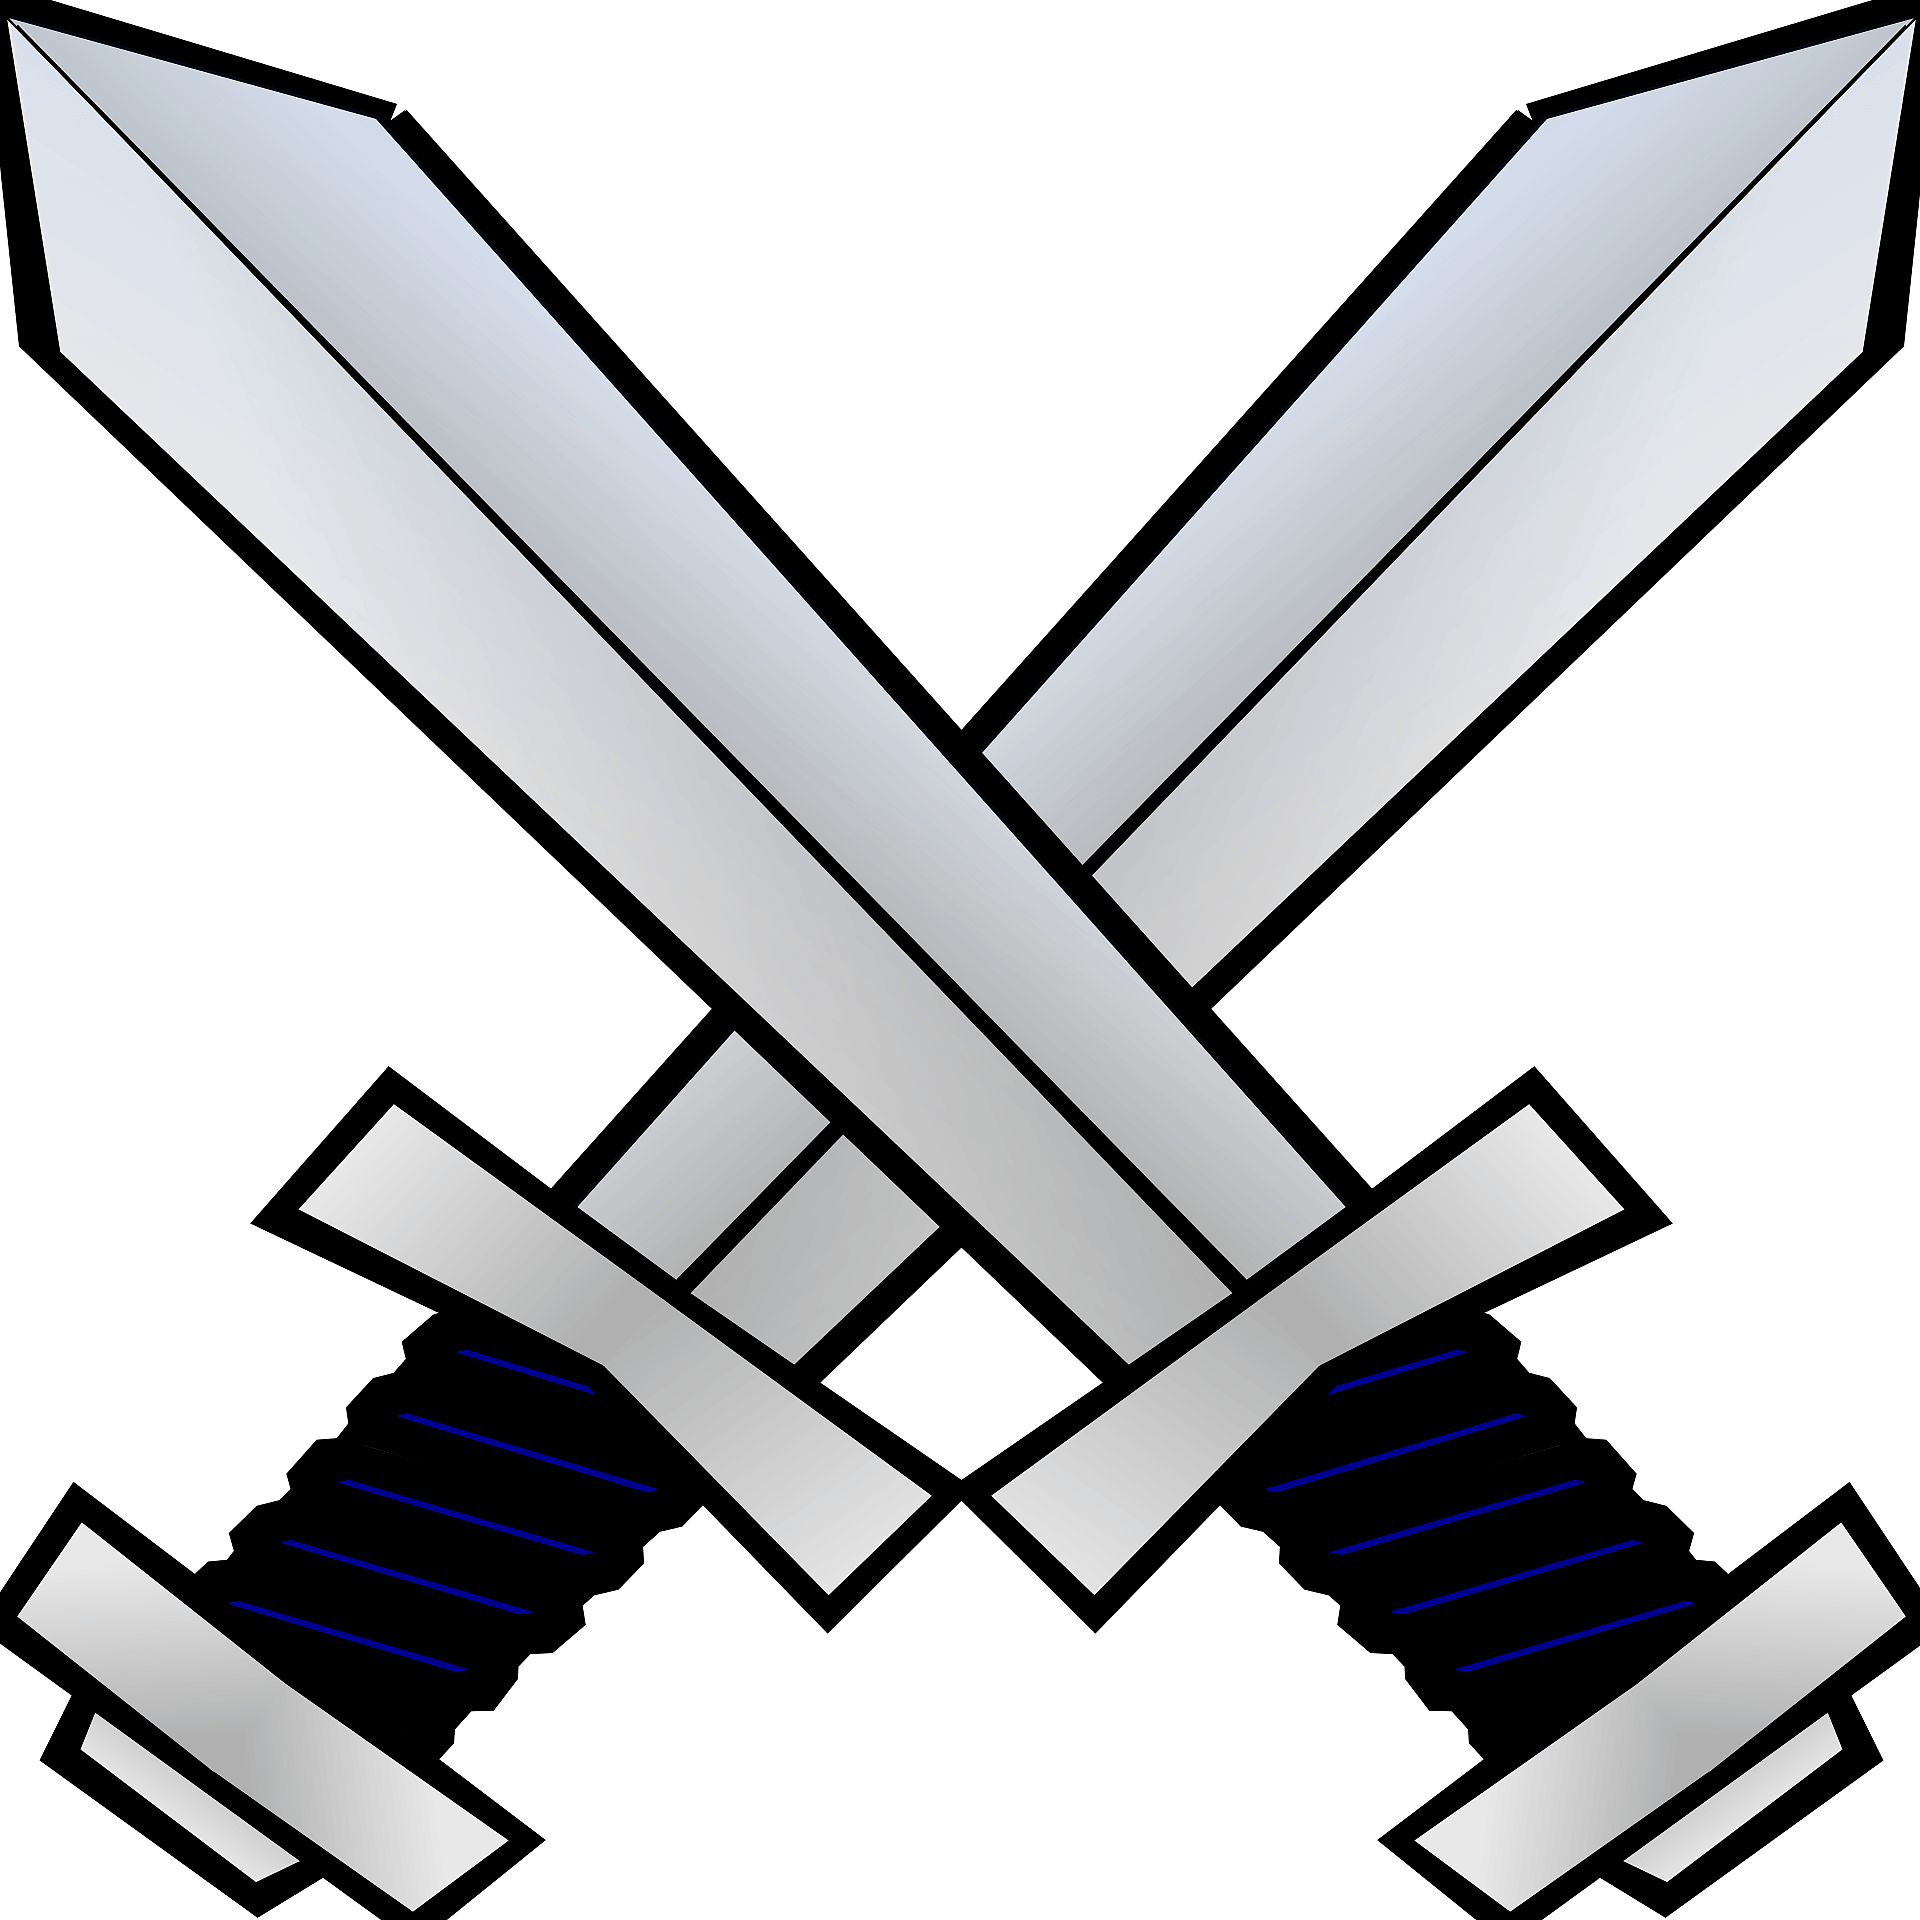 Crossed Swords Clipart by OO87adam on DeviantArt